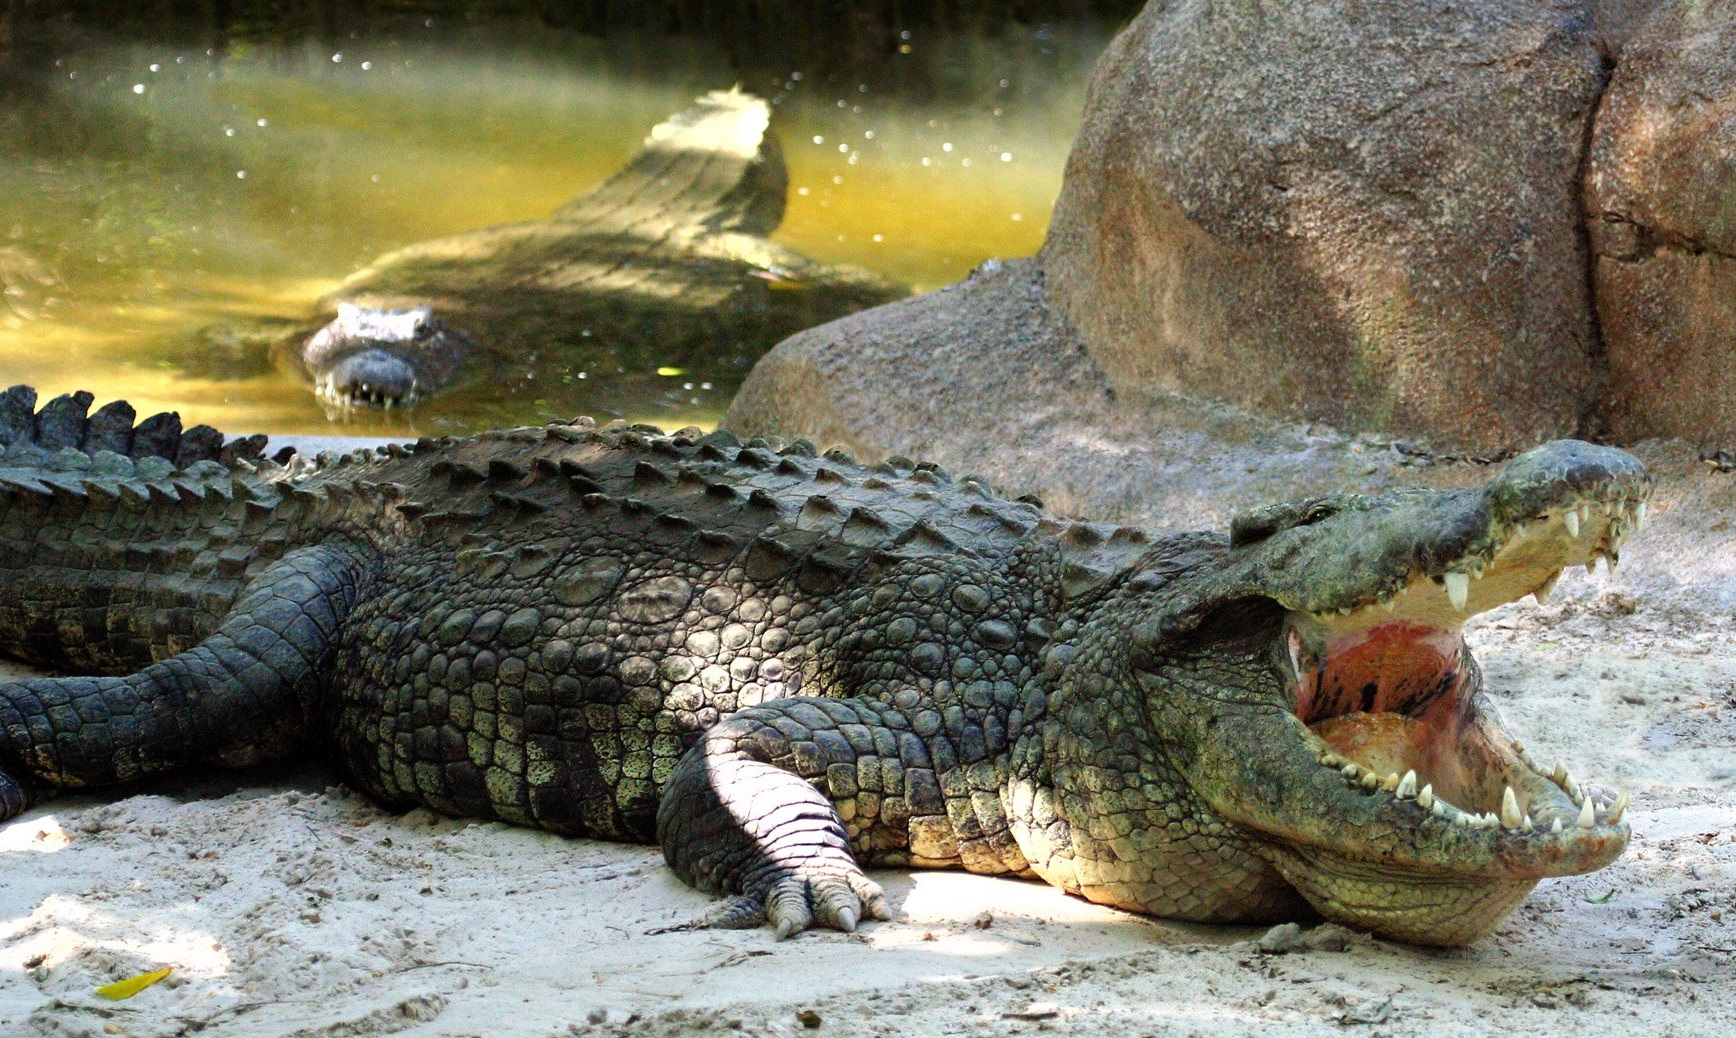 Member Mornings: Crocodiles